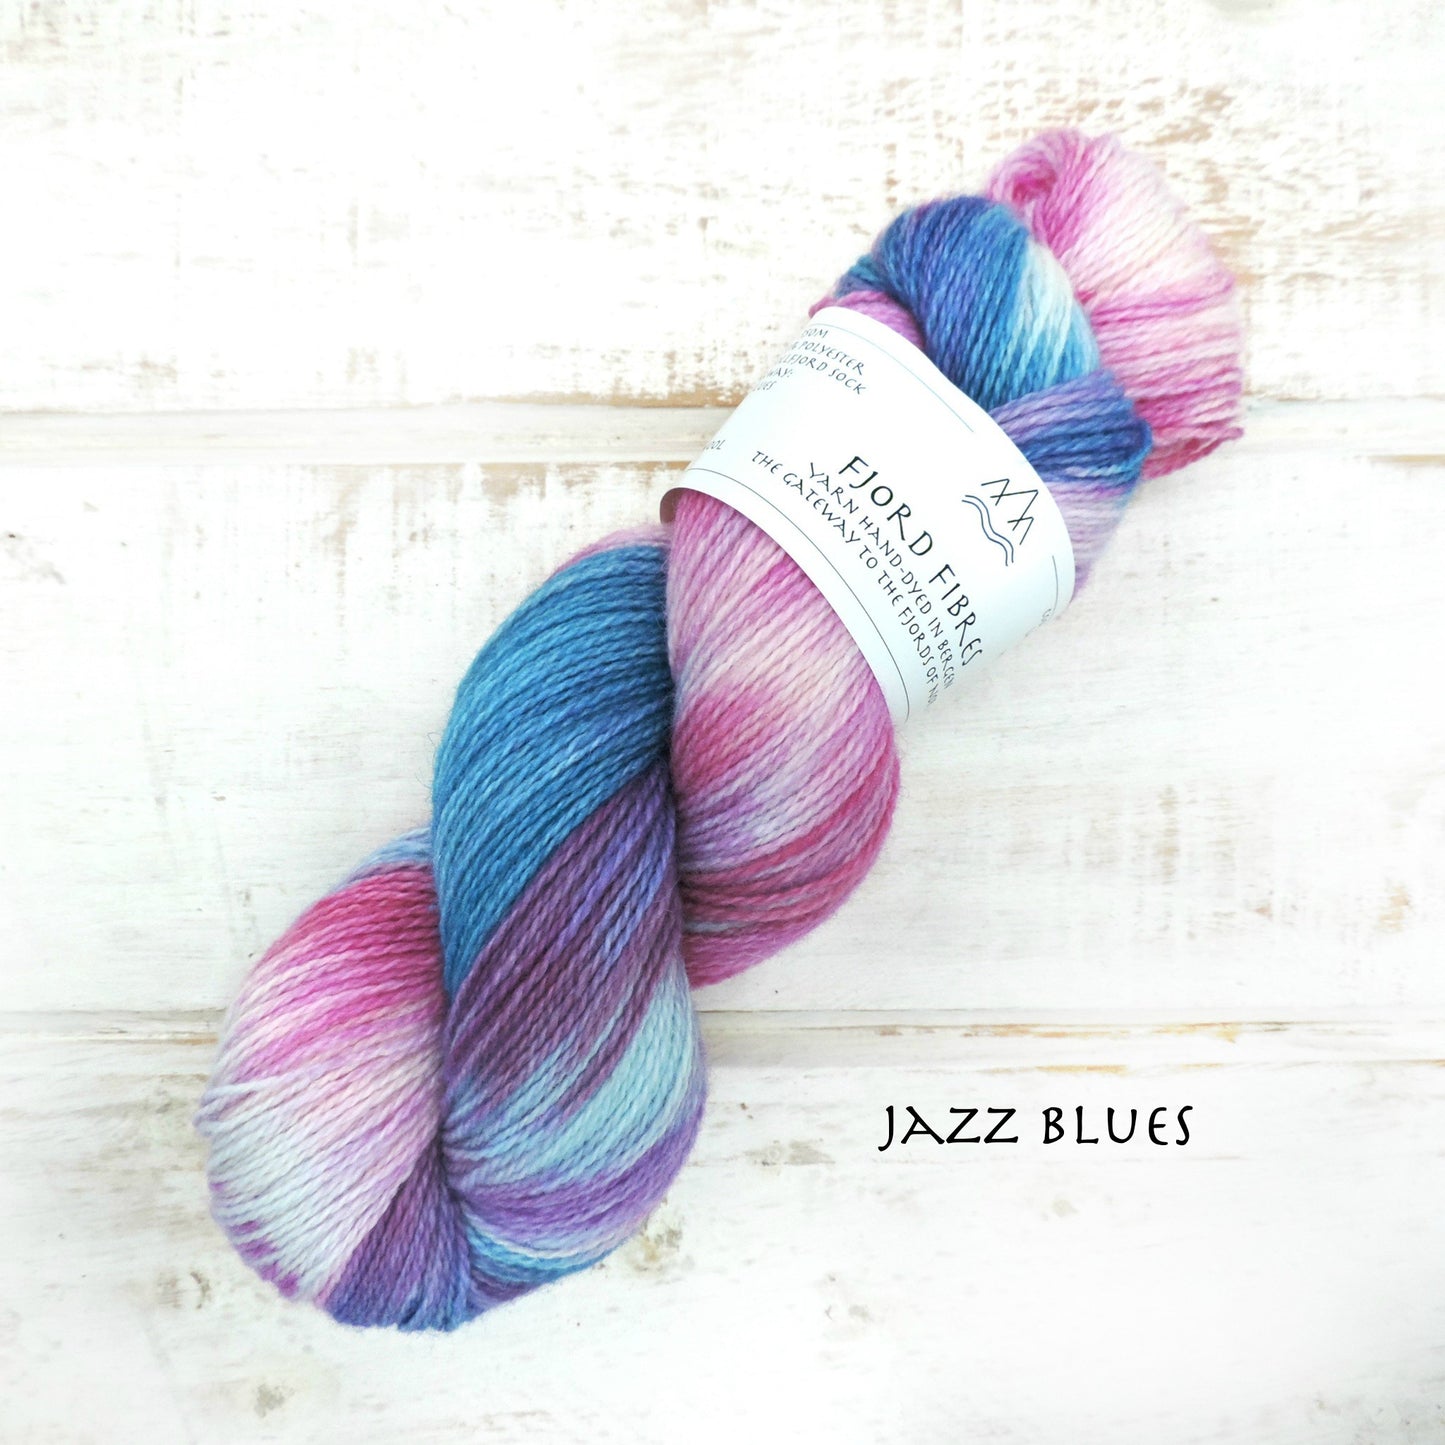 All that Jazz Socks Kit - Jazz Blues/Coal Dust - Yarn and Printed Pattern in English/Norwegian